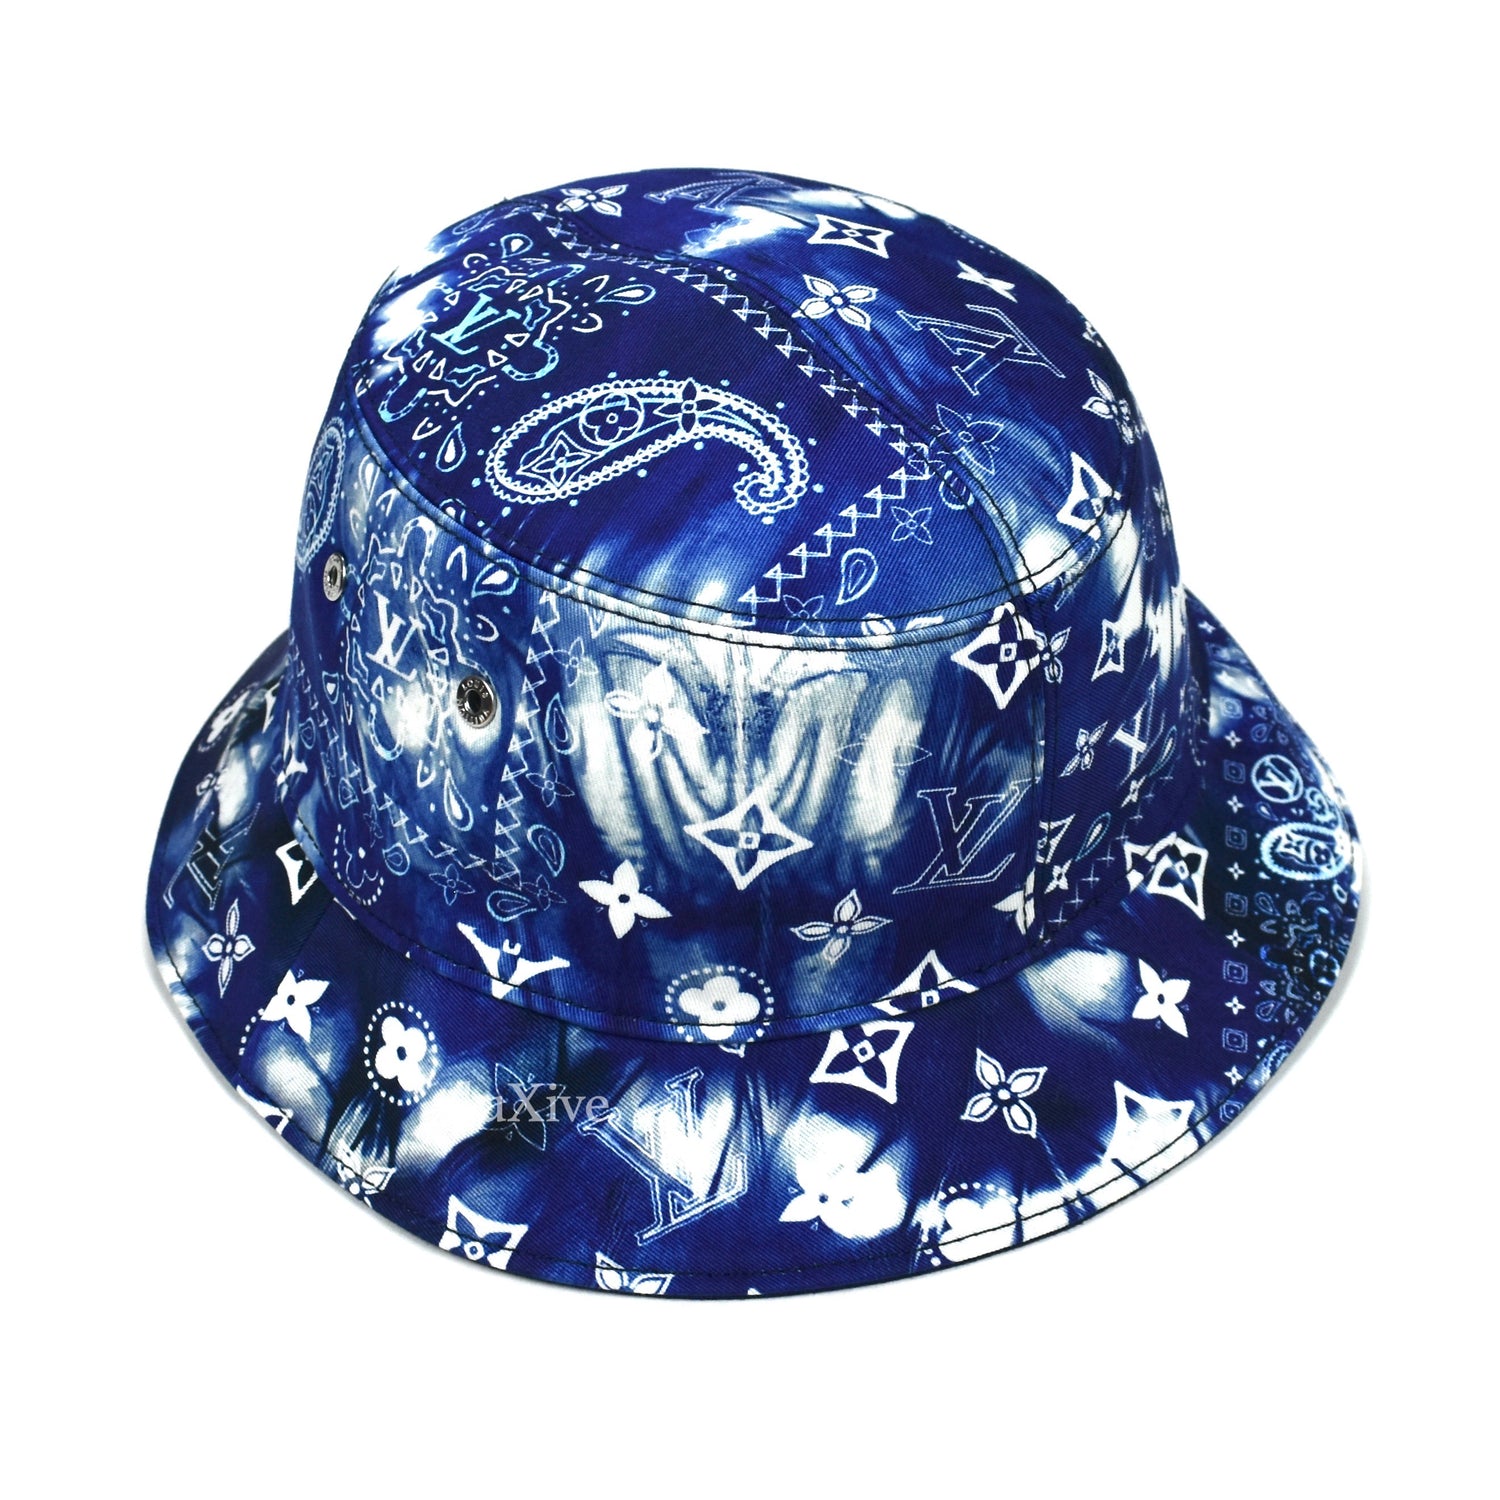 Louis Vuitton Lv Monogram Bucket Hat